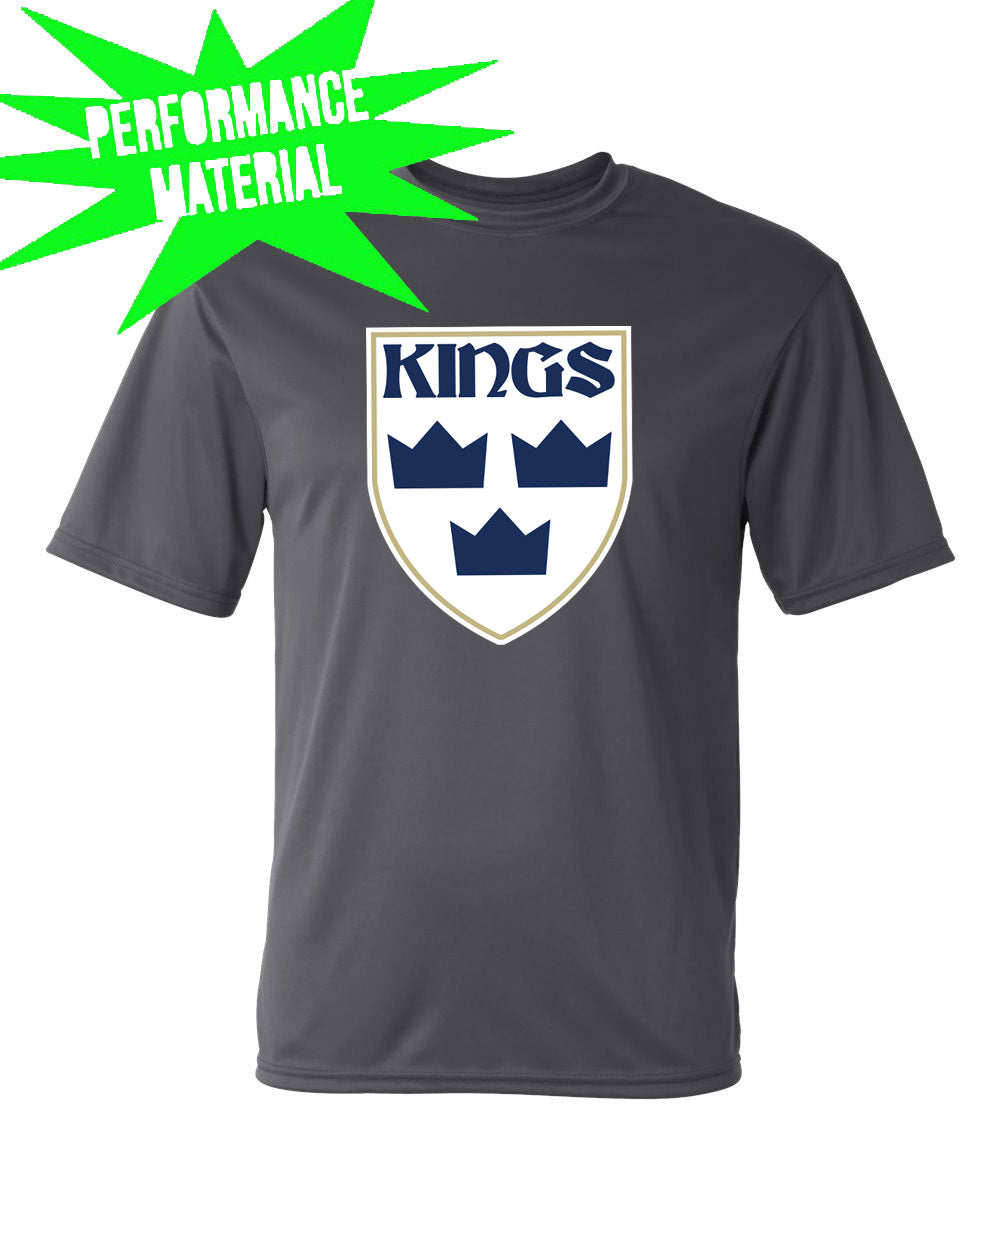 Kings Hockey Performance Material Logo T-Shirt